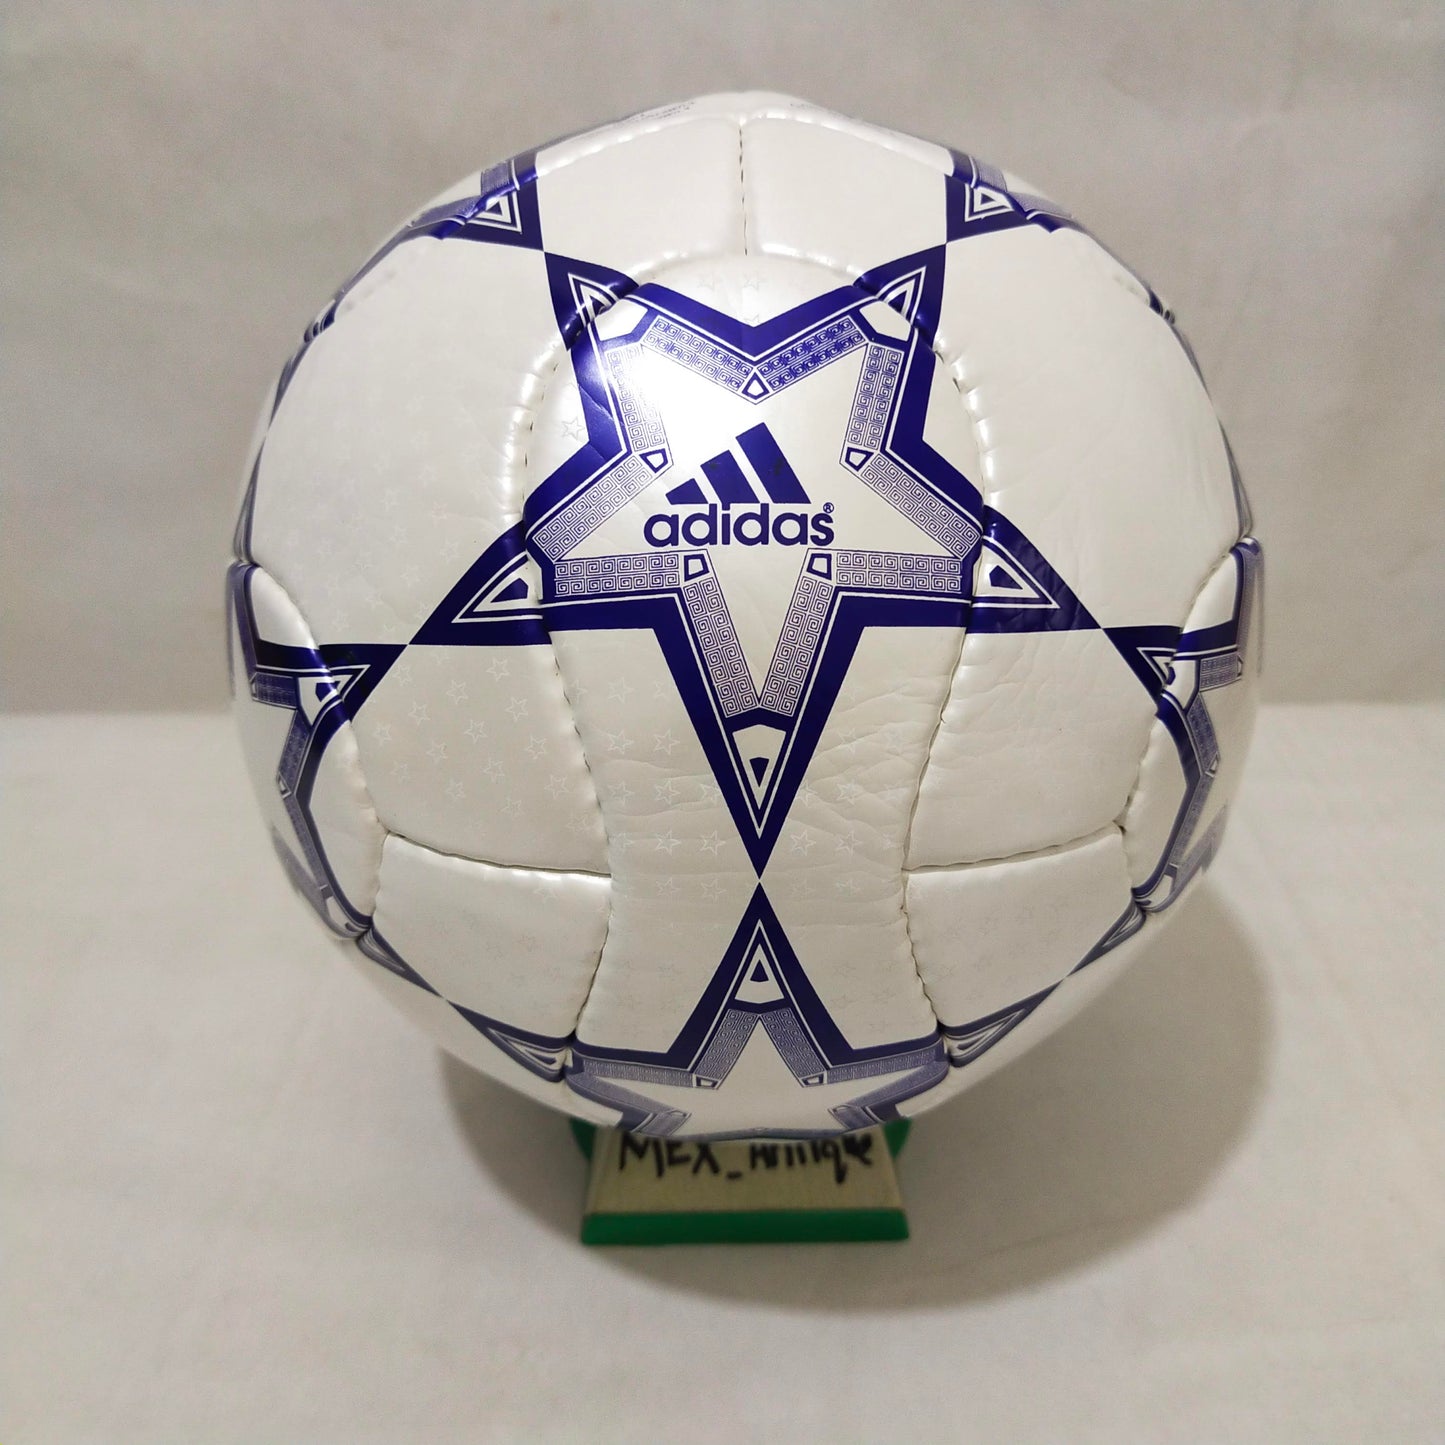 Adidas Finale Athens | 2006-2007 | Final Ball | UEFA Champions League Ball | Size 5 04